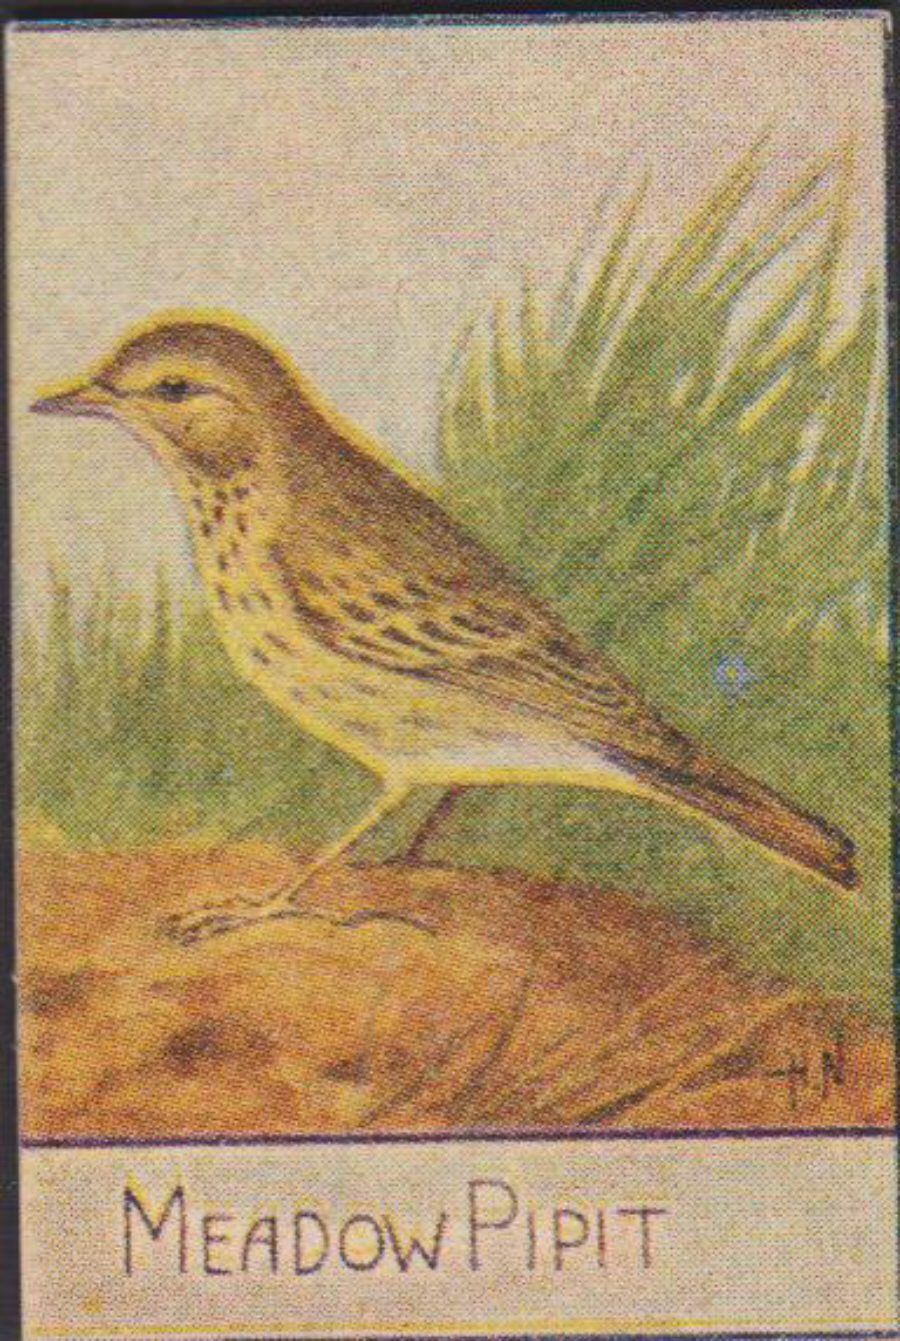 Spratt's British Bird Series Numbered No 56 Meadow Pipit